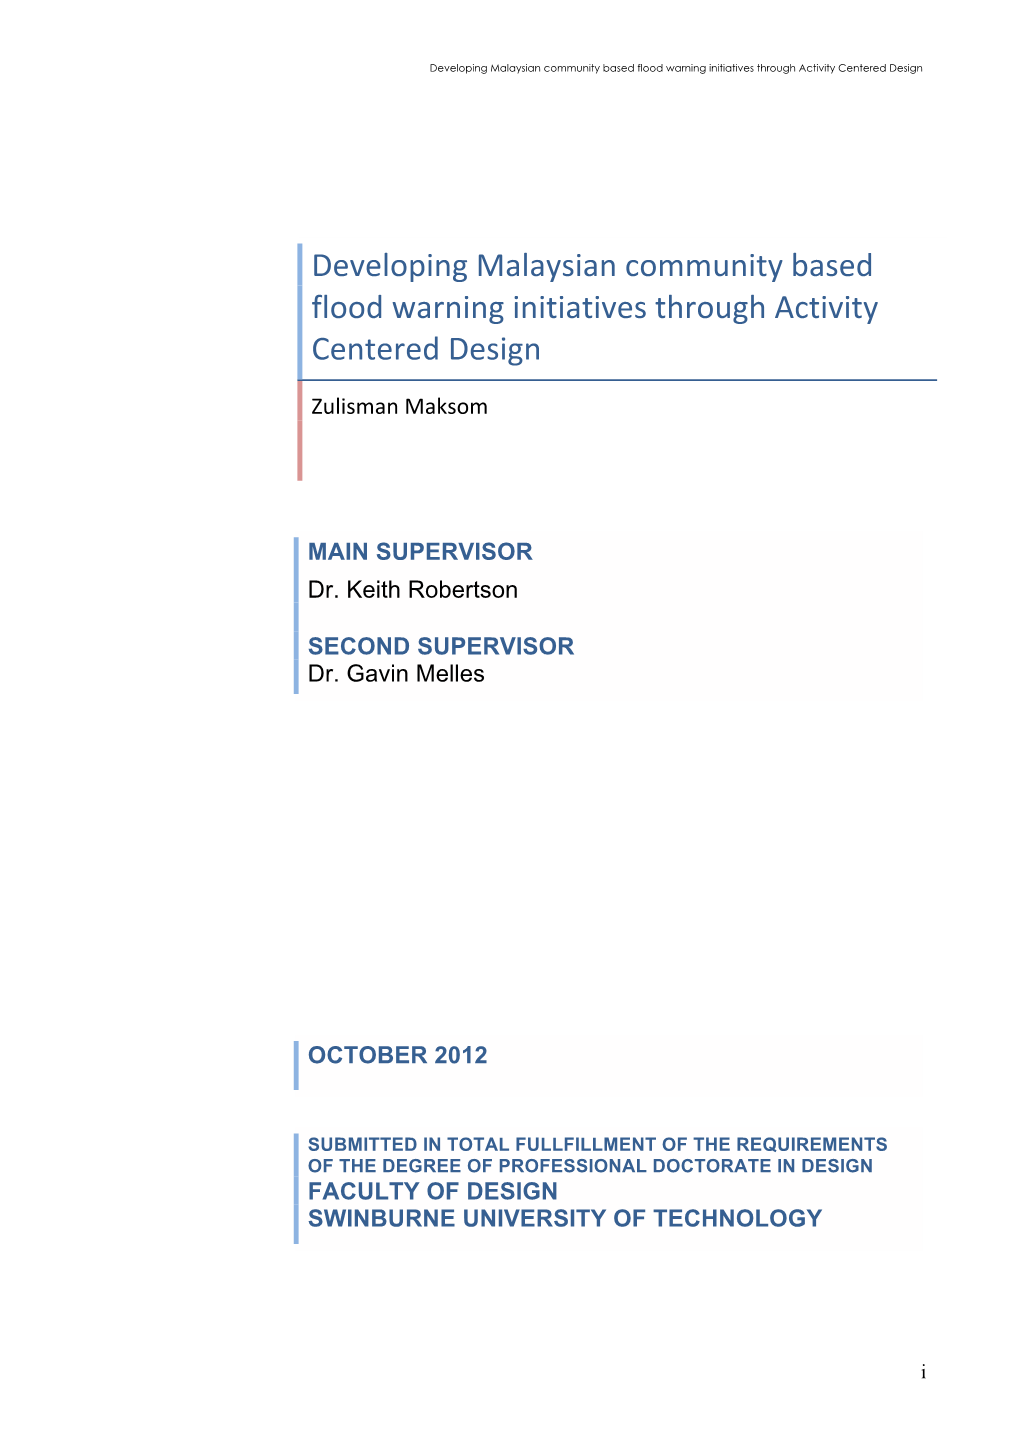 Developing Malaysian Community Based Flood Warning Initiatives Through Activity Centered Design